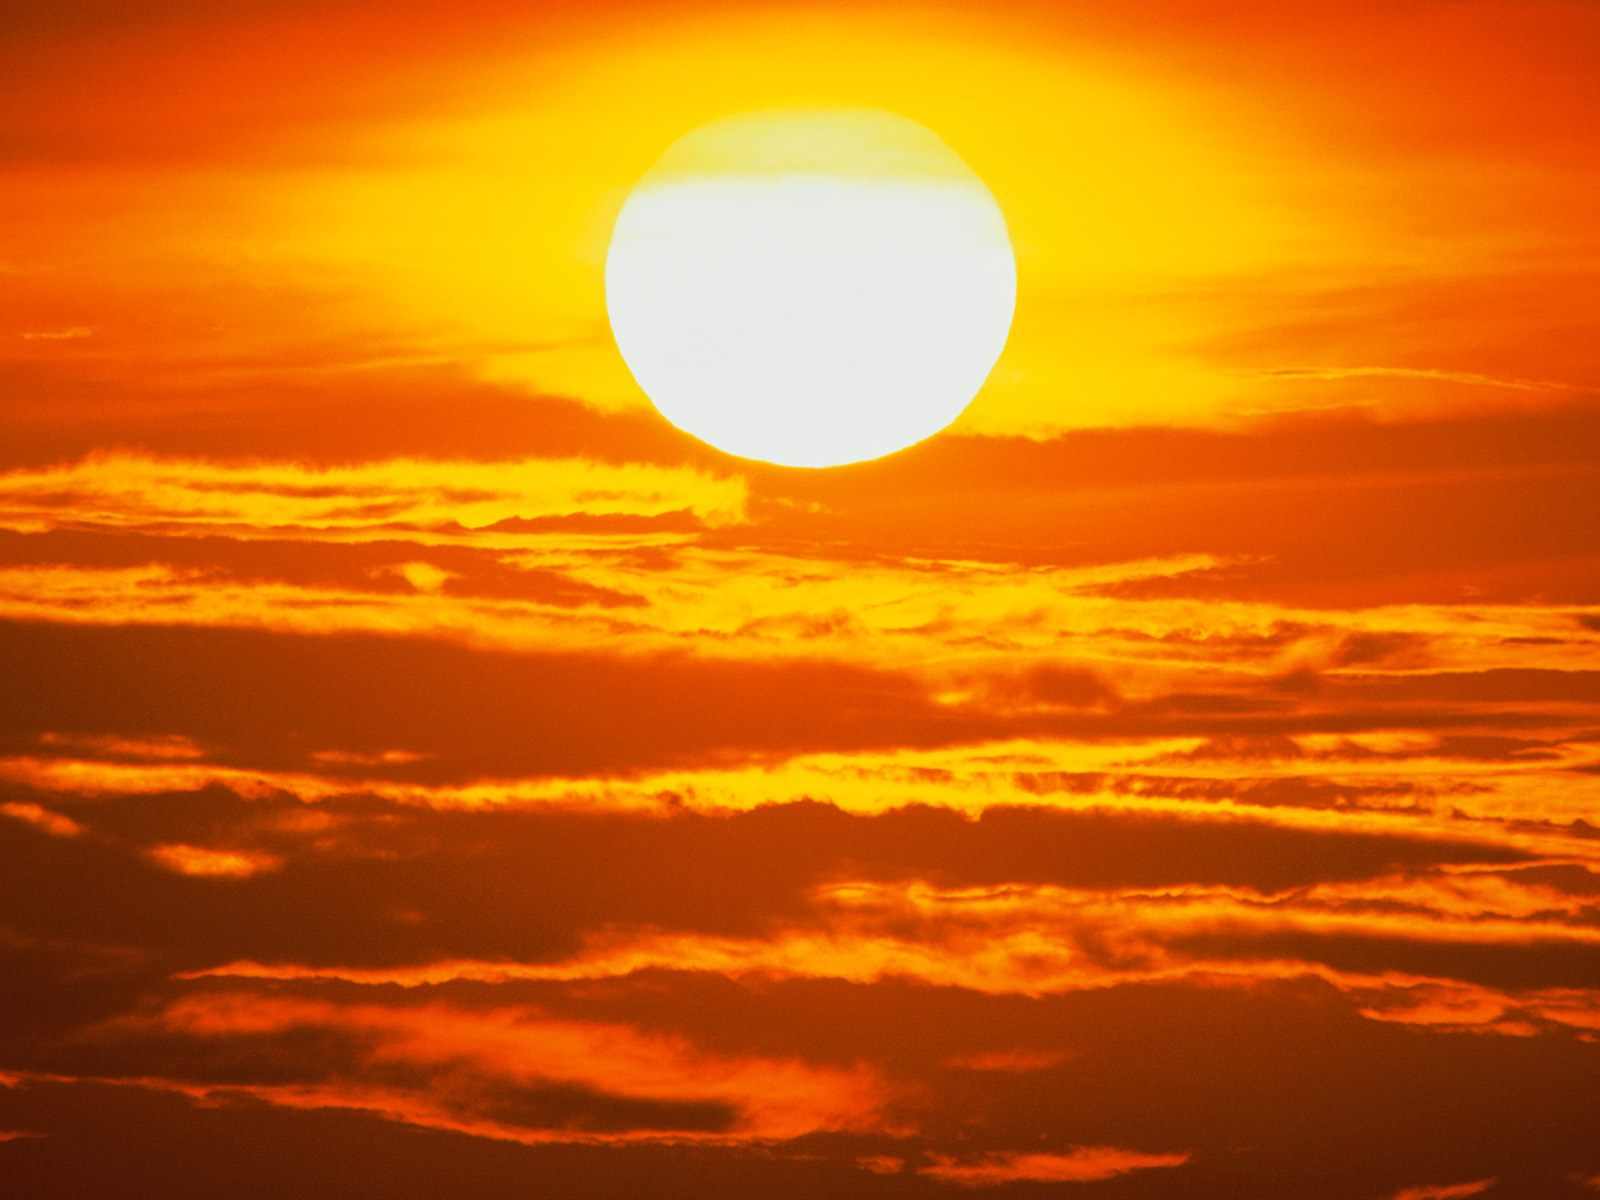 Burning Hot Sun – The Lintonian